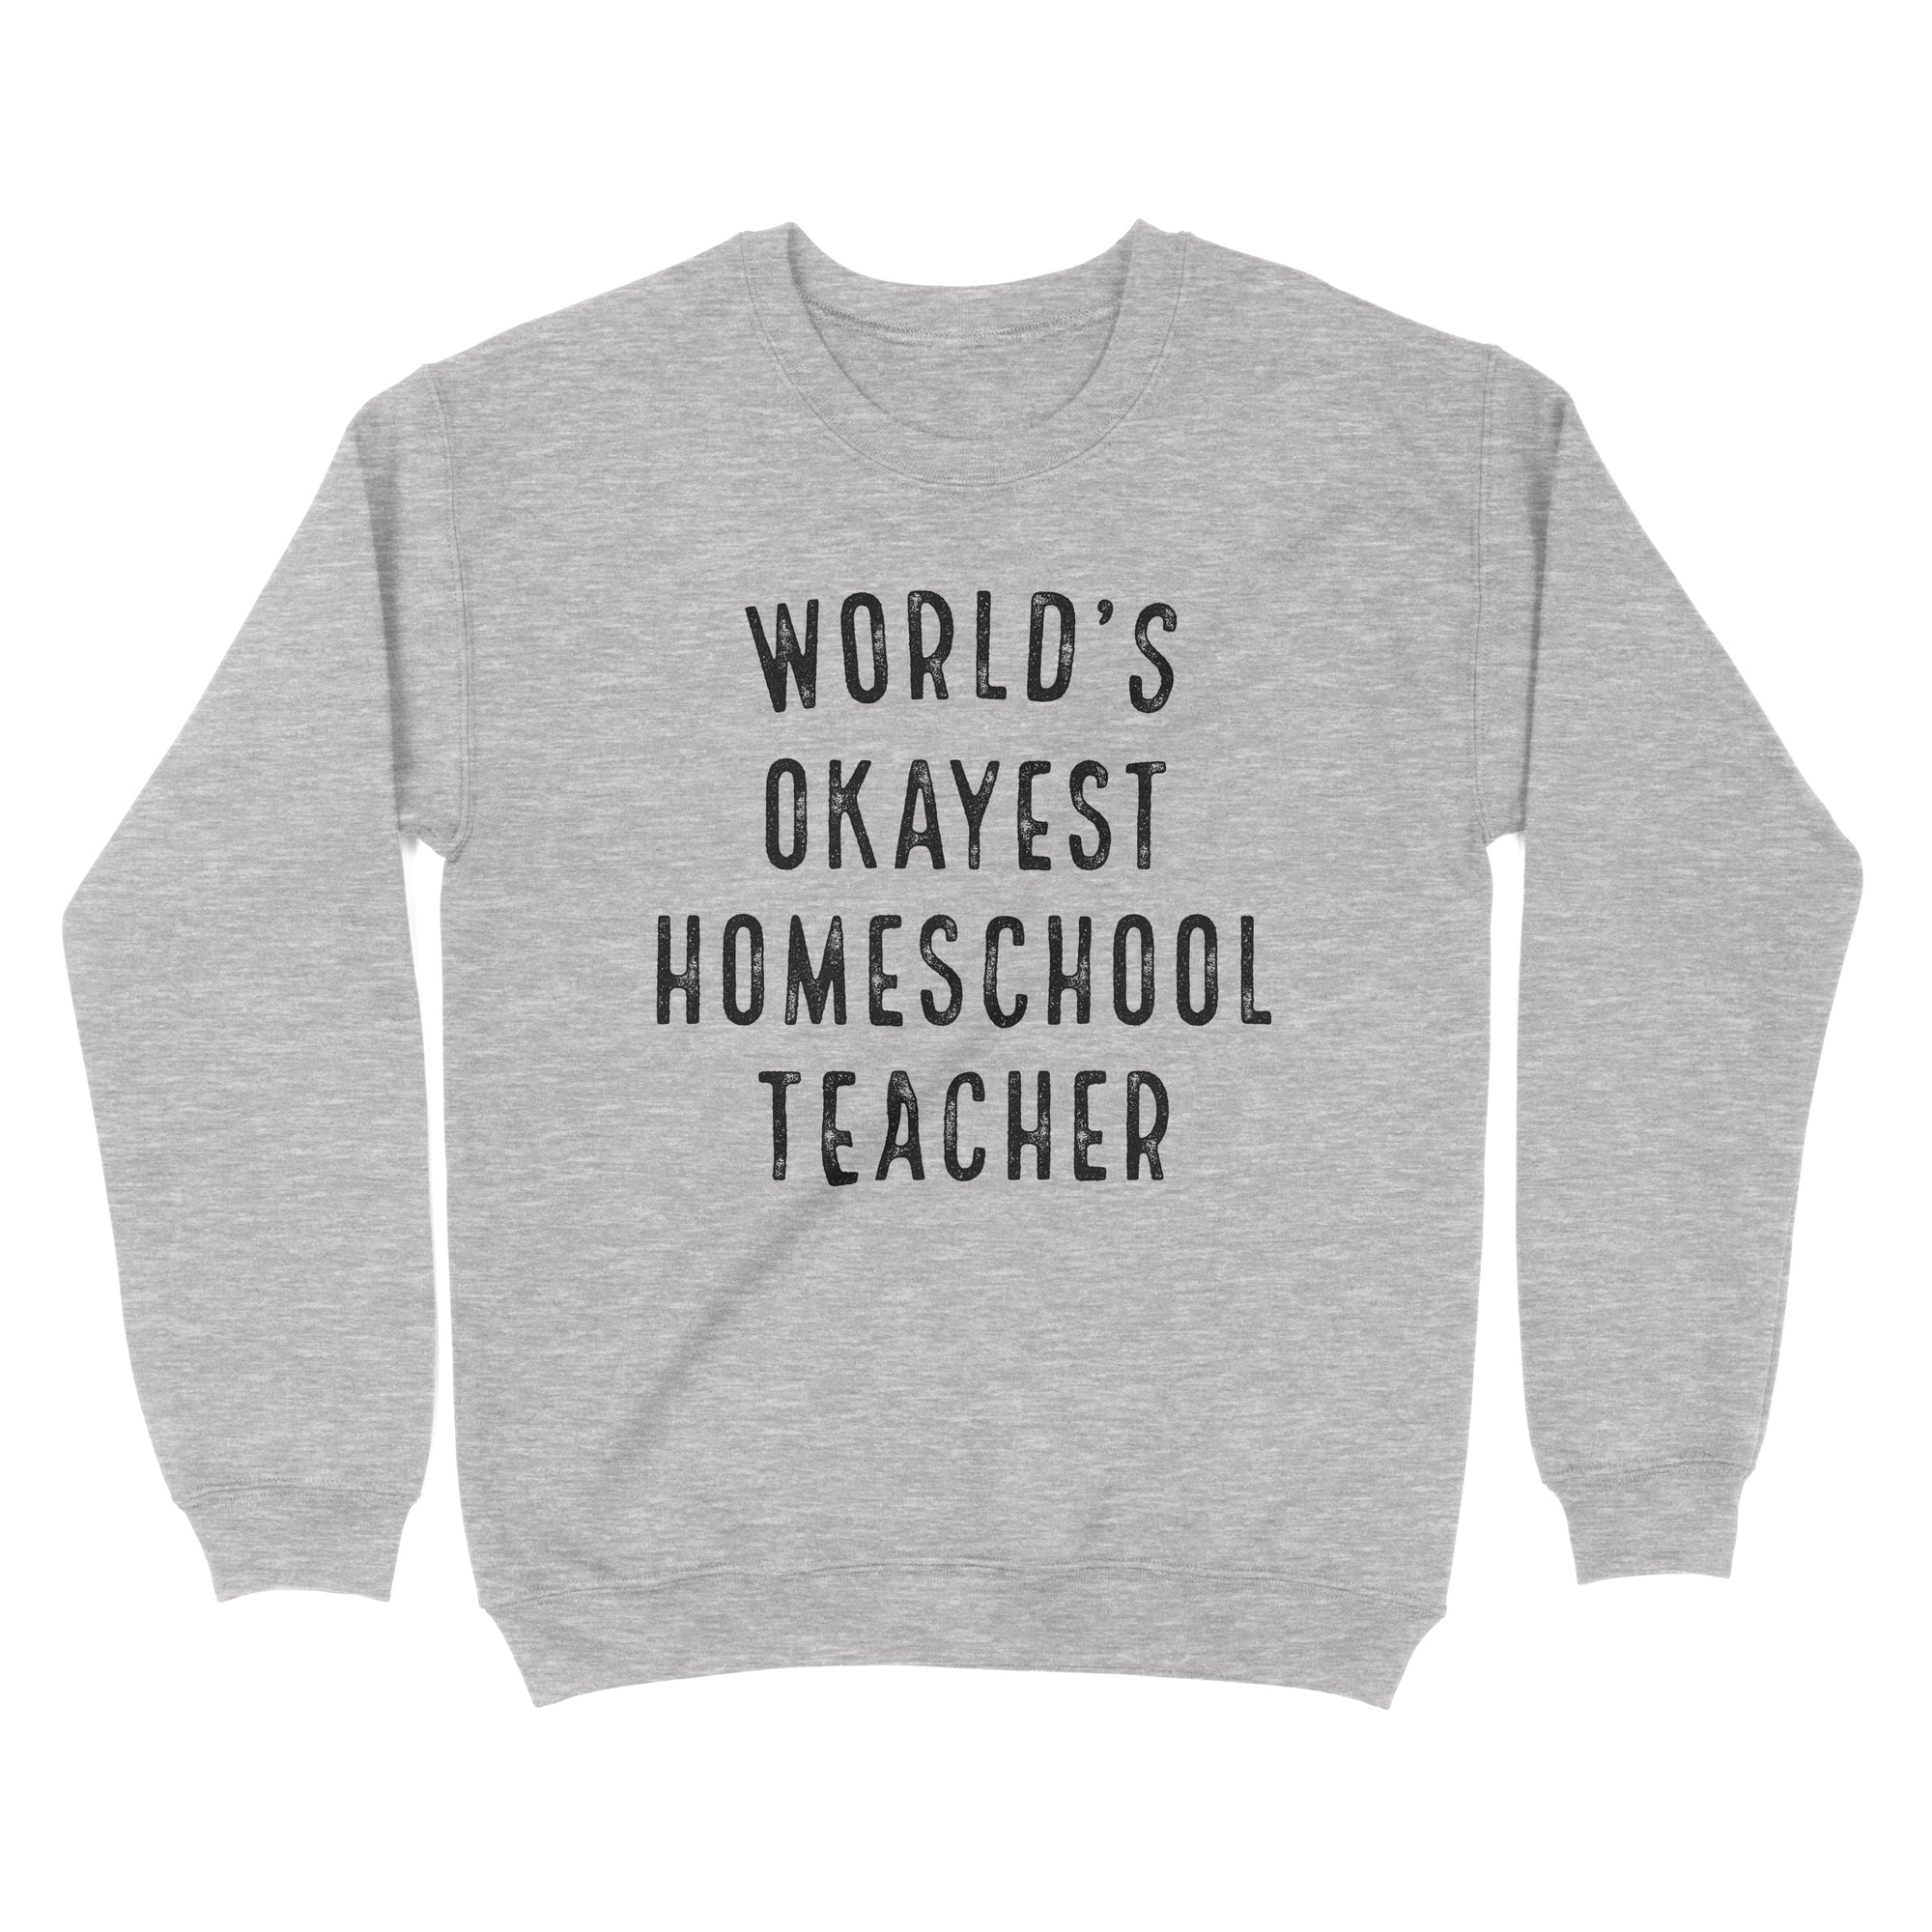 World's Okayest Homeschool Teacher Sweatshirt - anishphilip